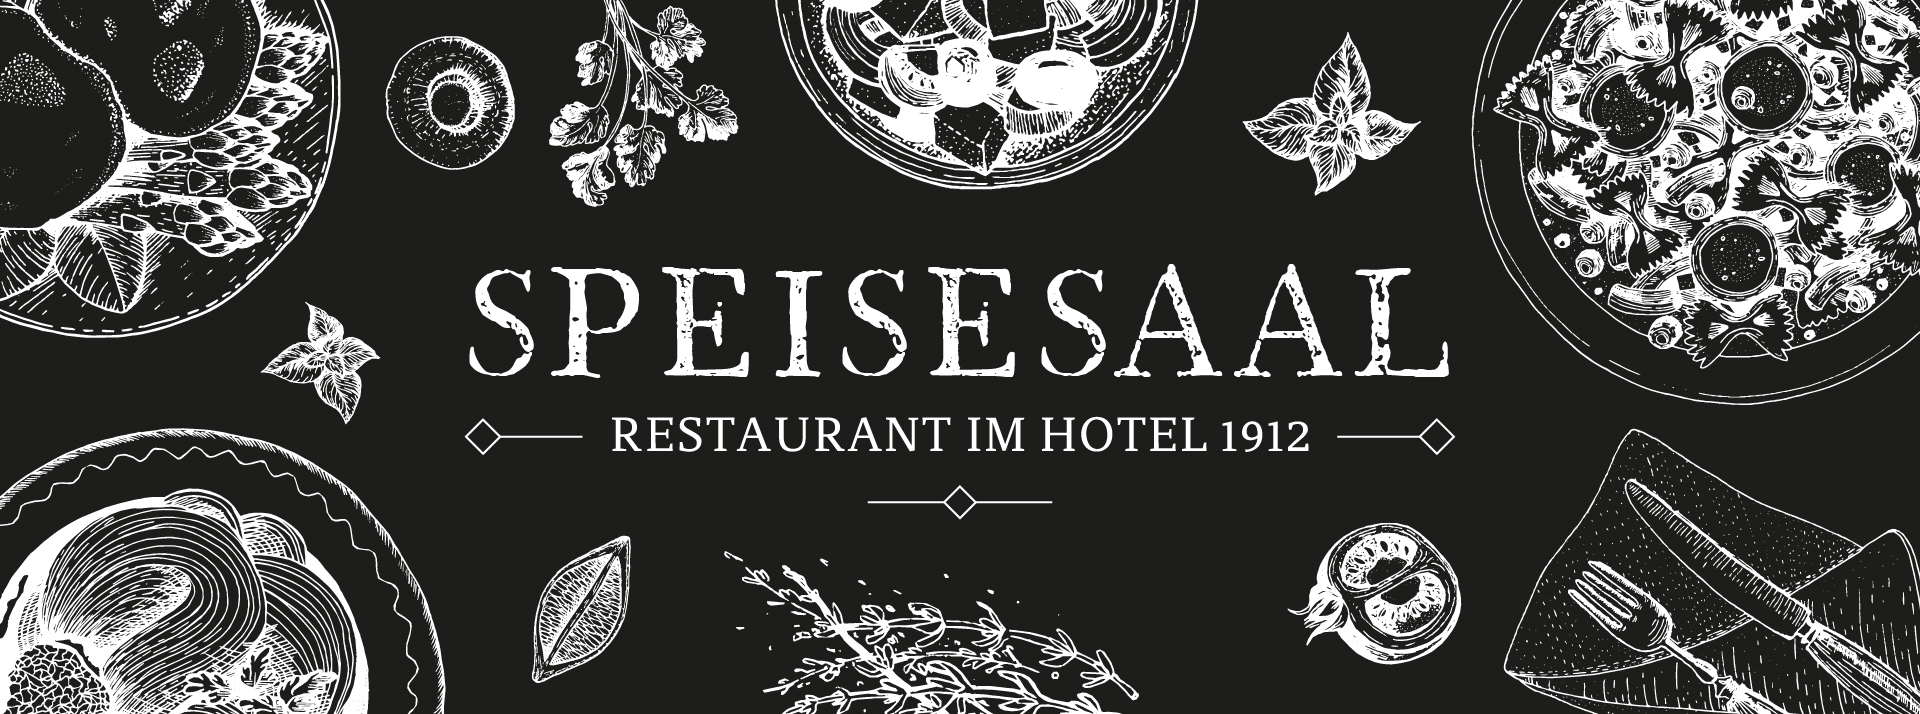 1912 Hotel – Speisesaal Restaurant – Tafel Illustration